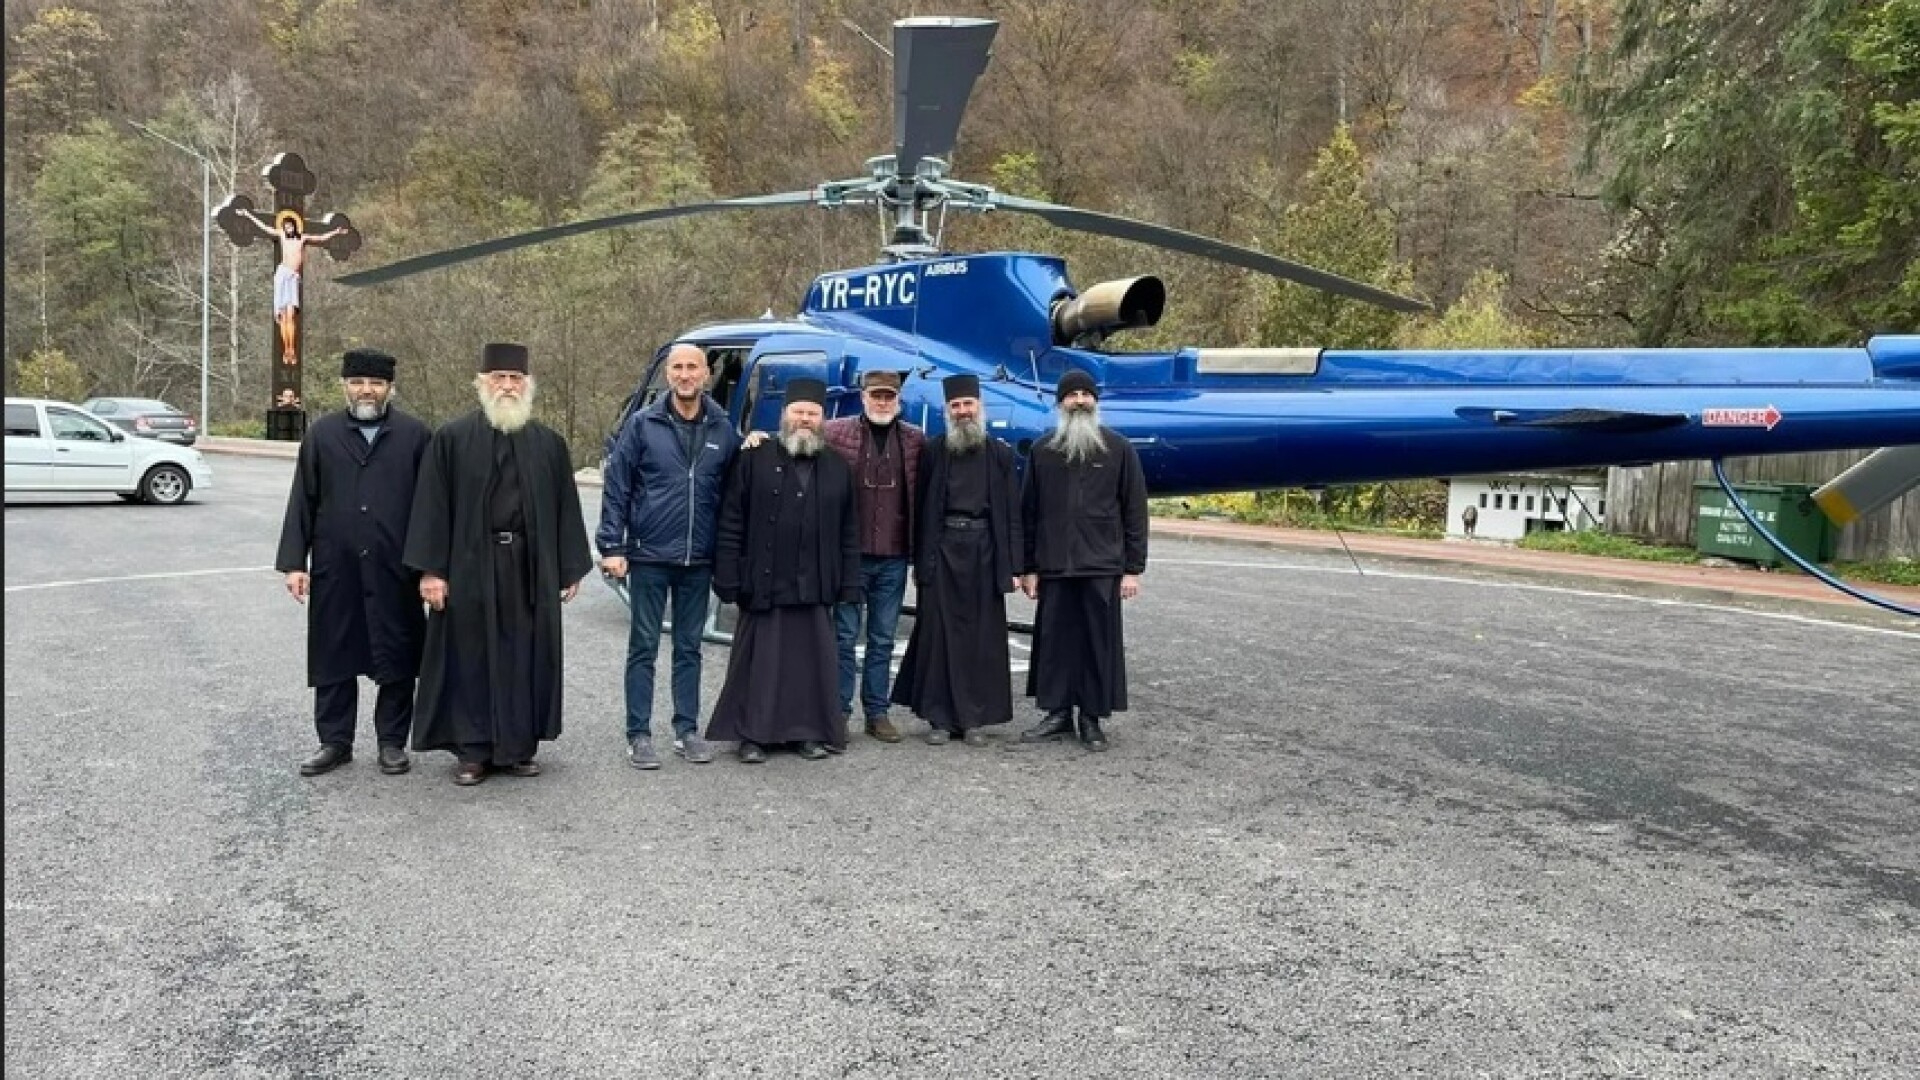 elicopter manastire lainici